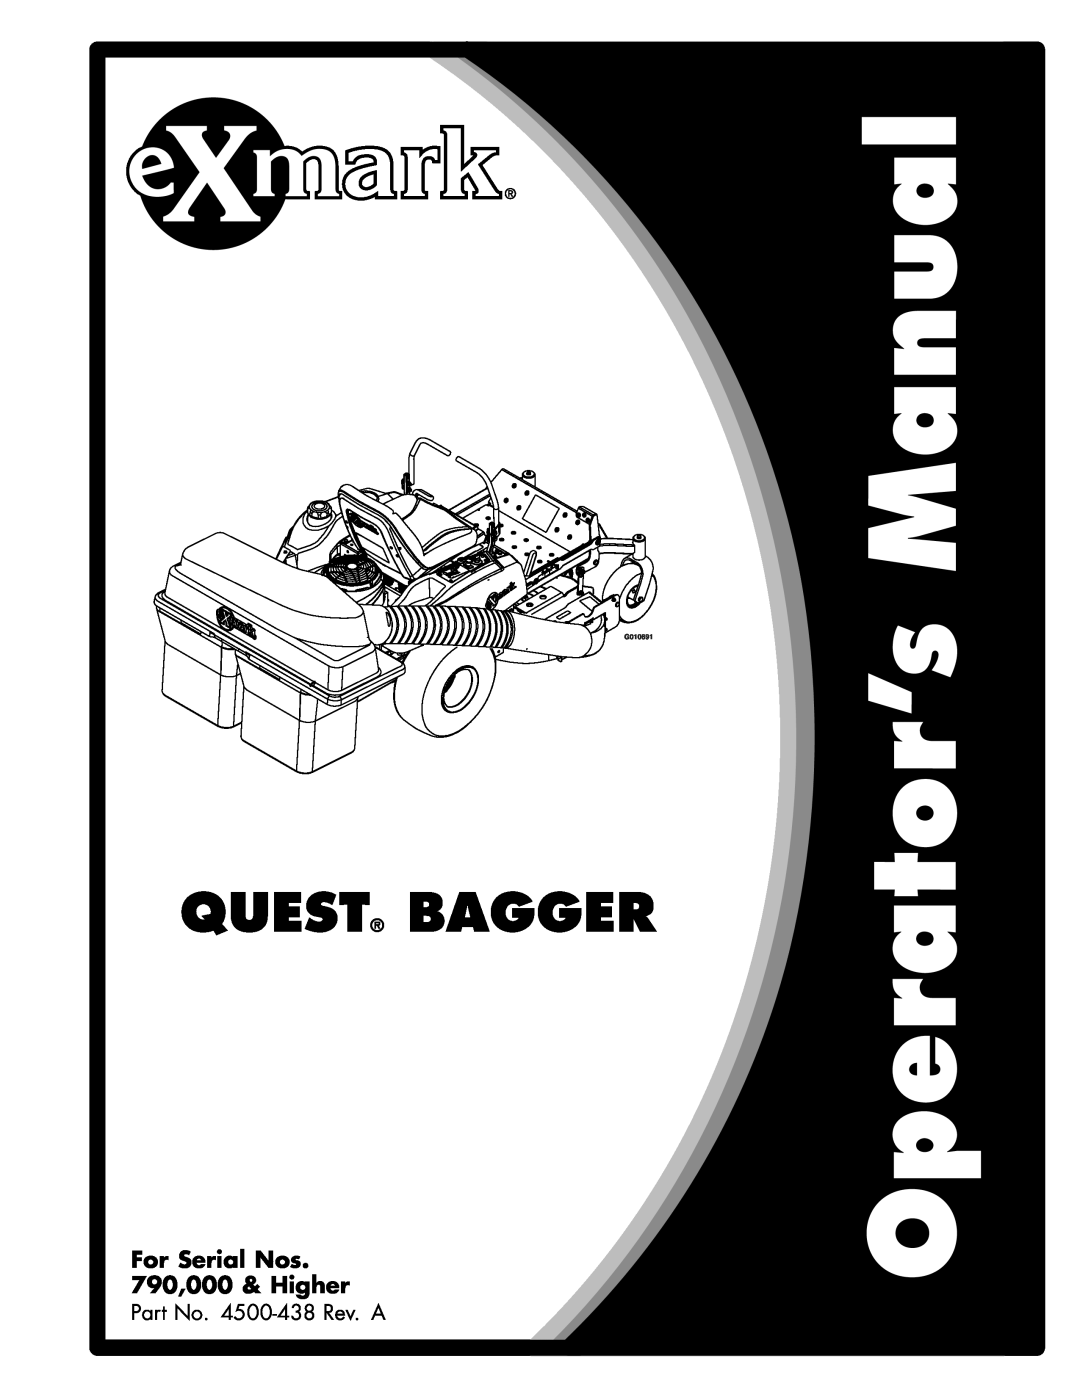 Exmark 4500-438 rev. a manual Quest Bagger, For Serial Nos 790,000 & Higher 